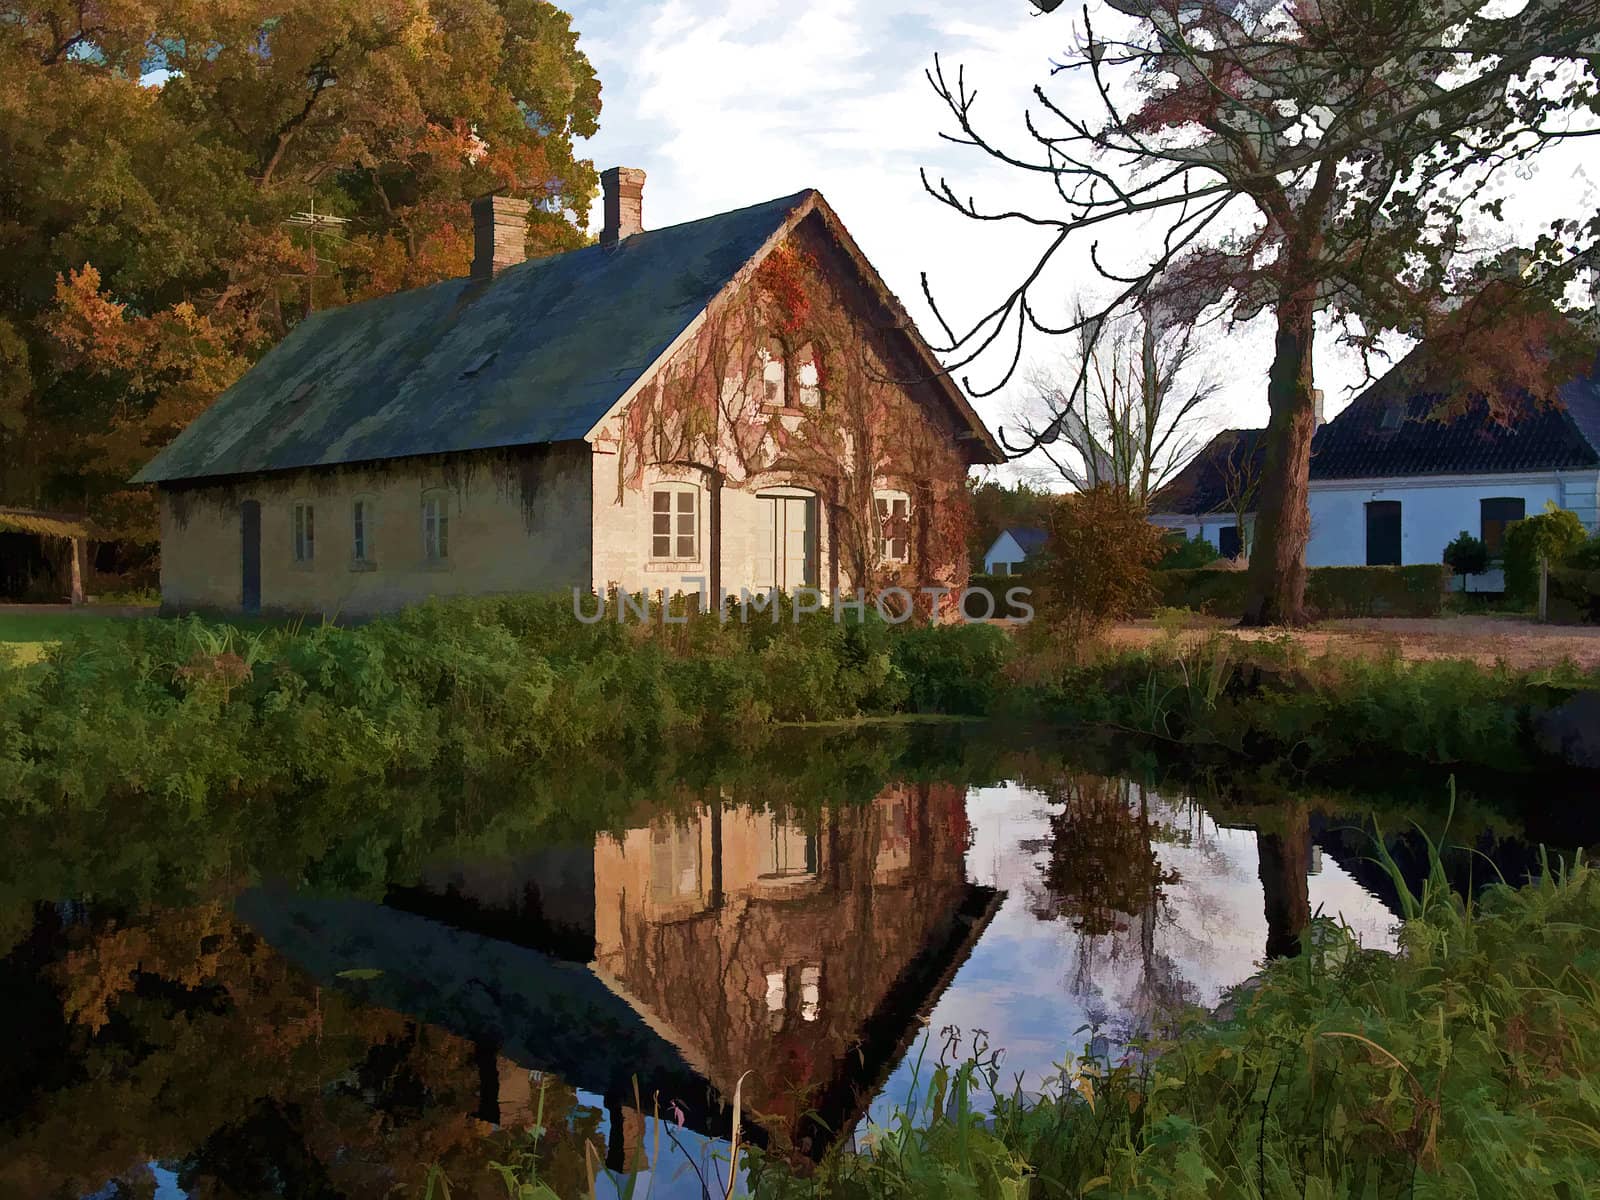 Beautiful countryside house reflected in a lake Denmark digital art manipulation